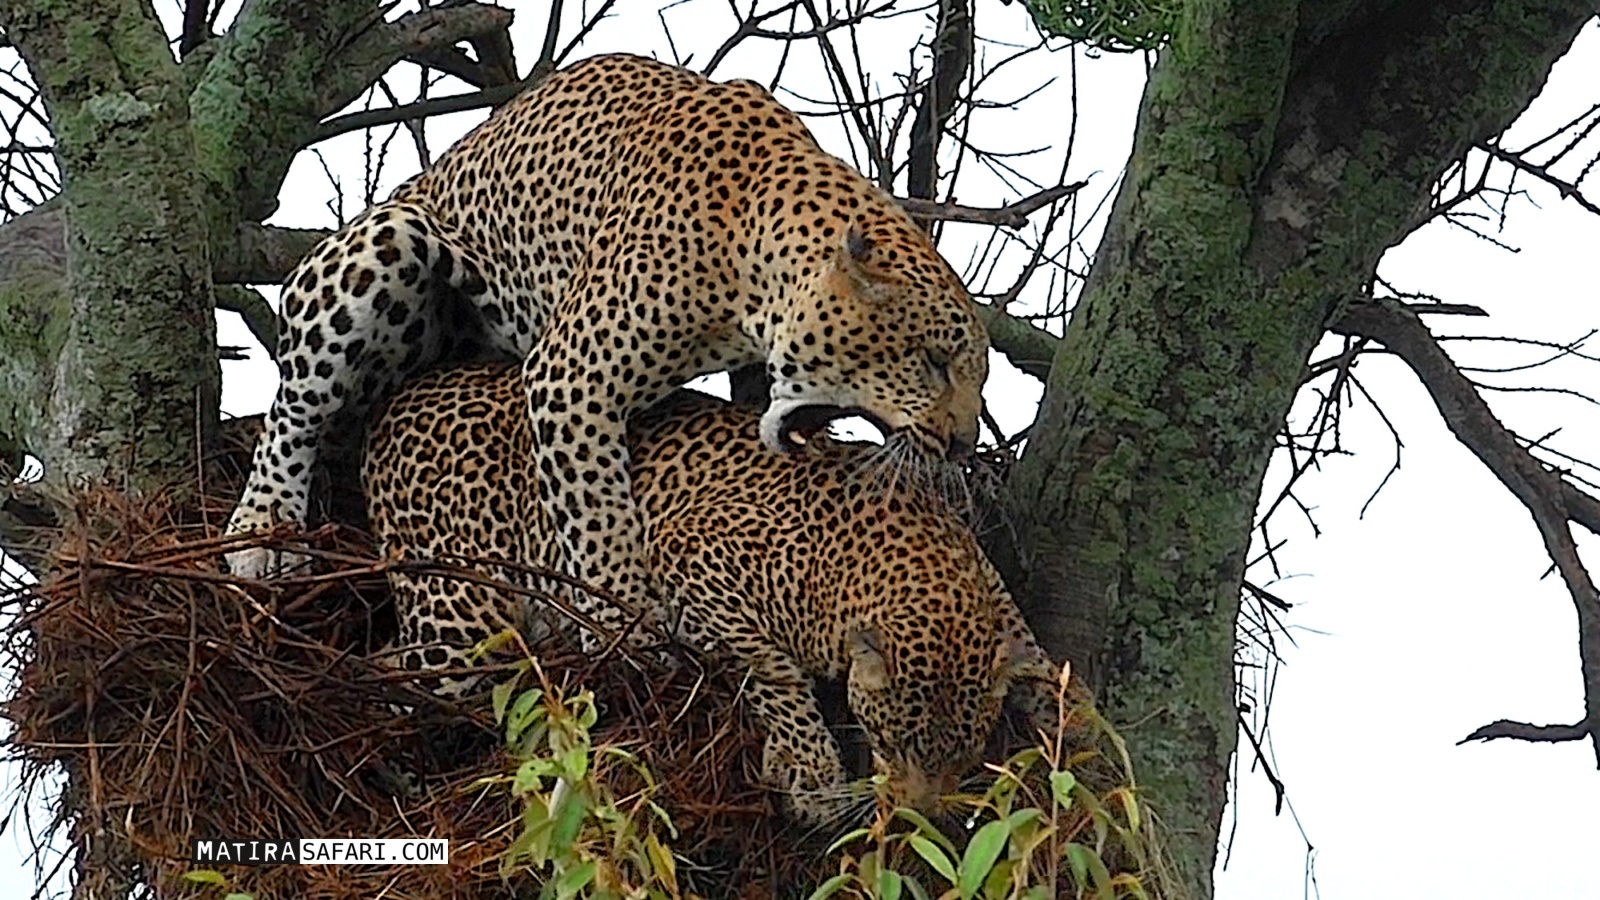 Leopard mating in bird's nest! - Matira Safari